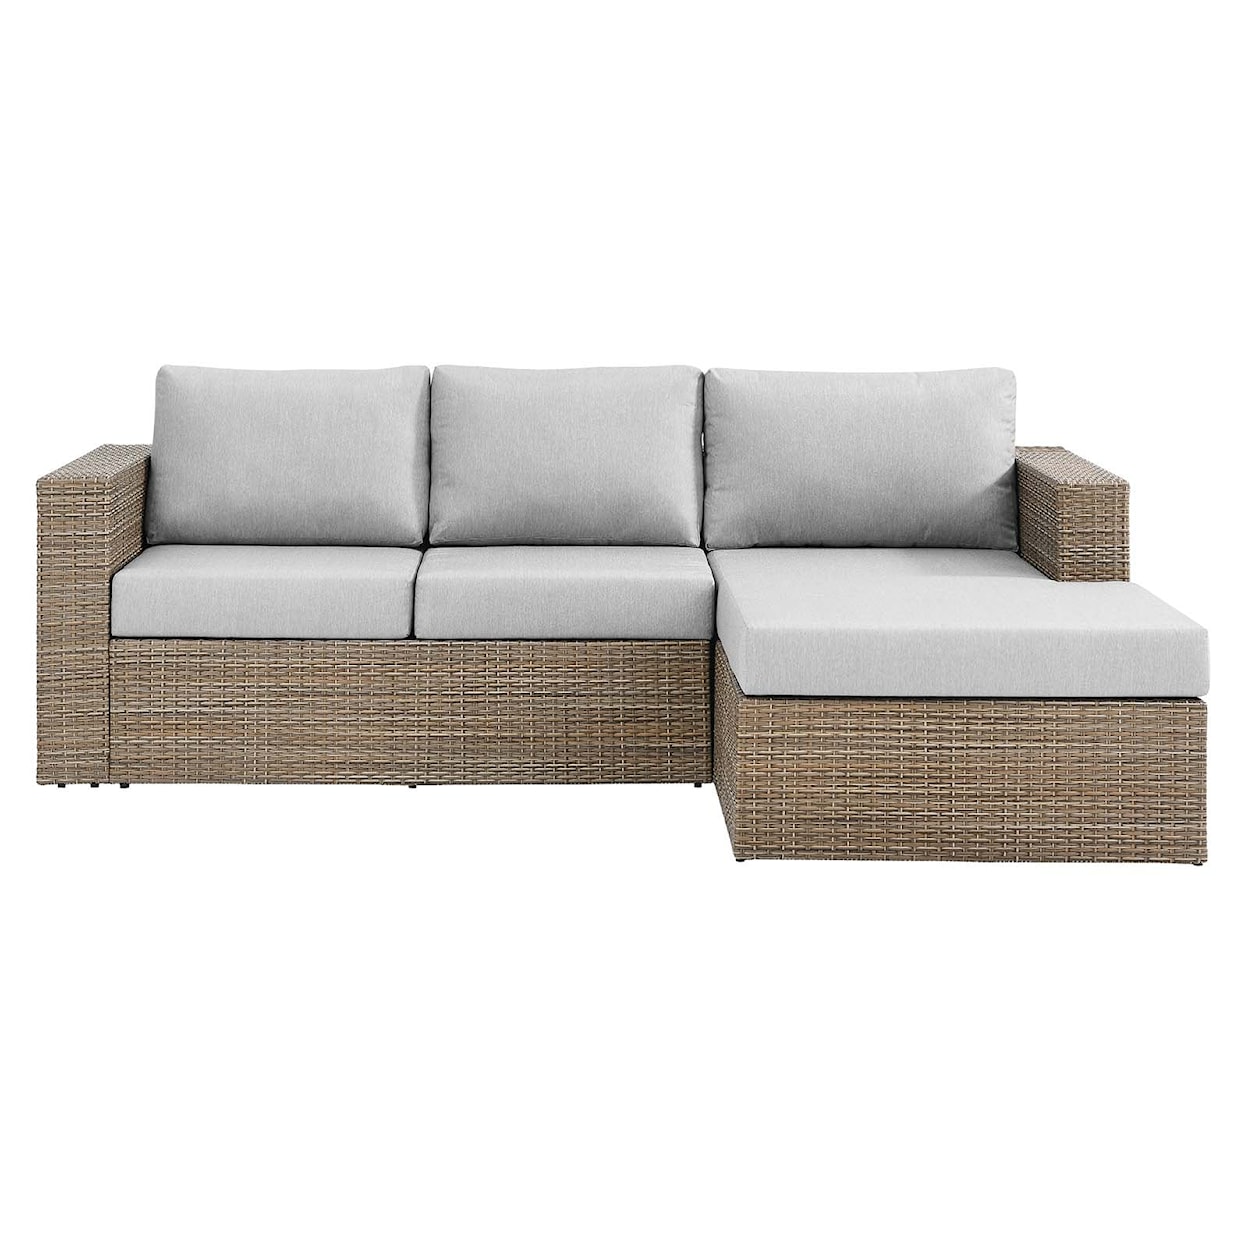 Modway Convene Sectional Sofa